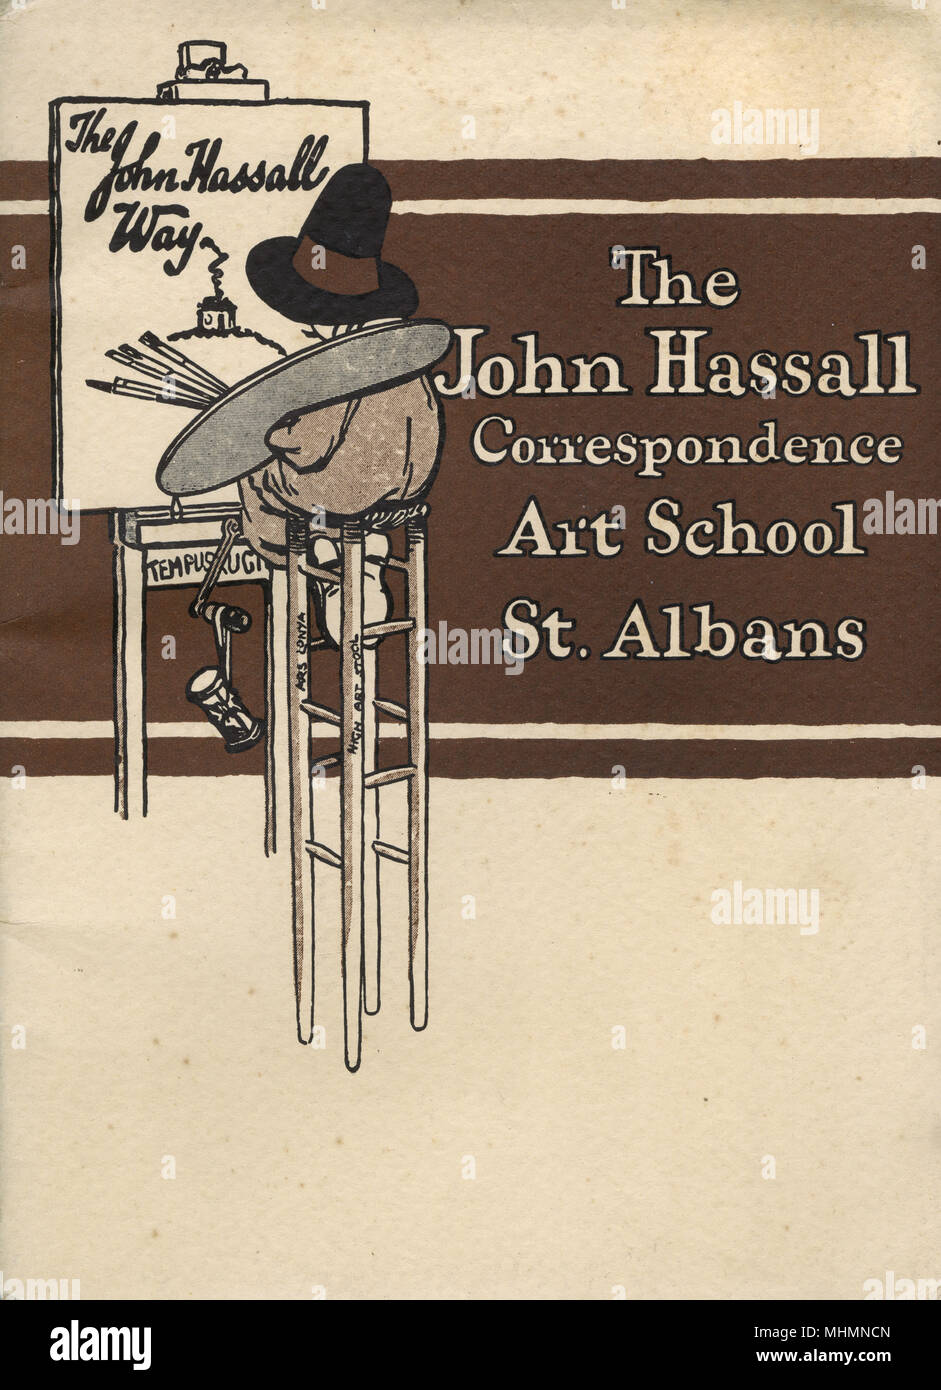 John Hassall Correspondence Art School brochure Stock Photo